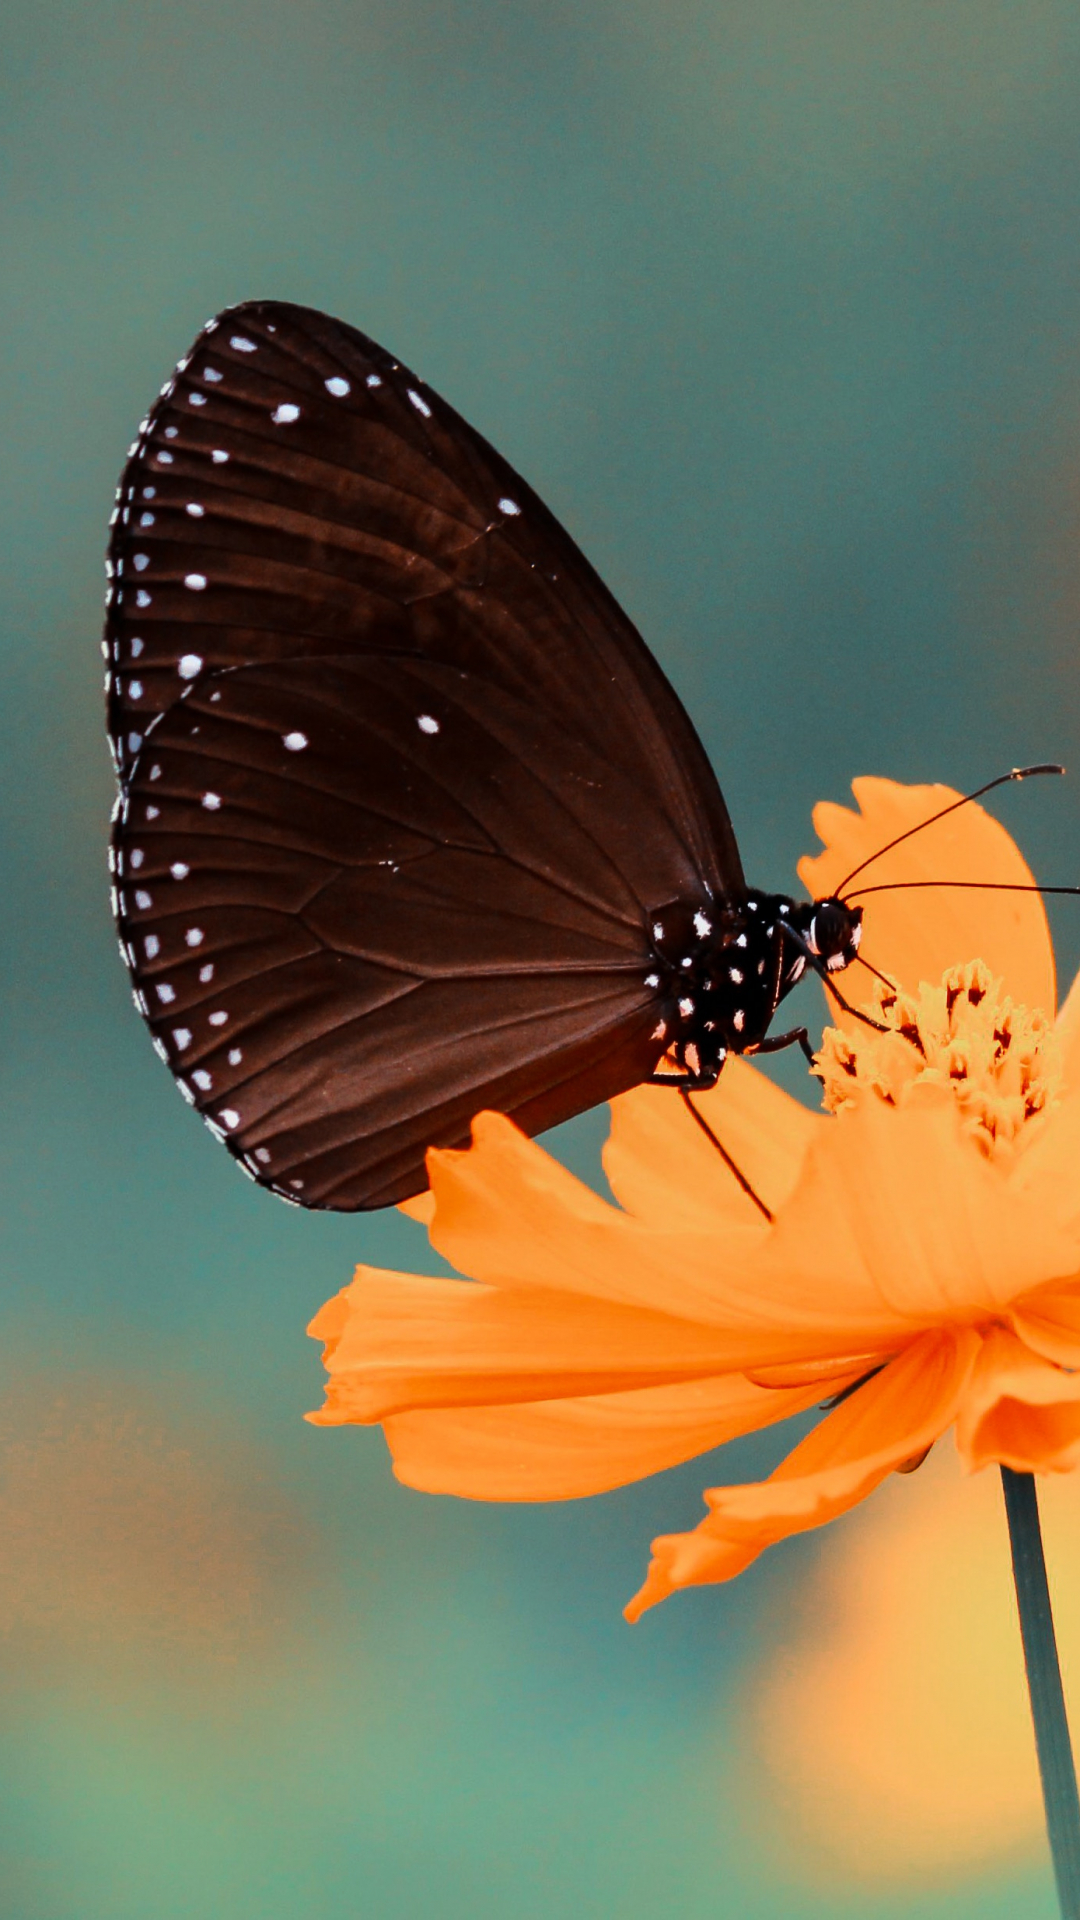 Black Butterfly Contrast iPhone Wallpaper